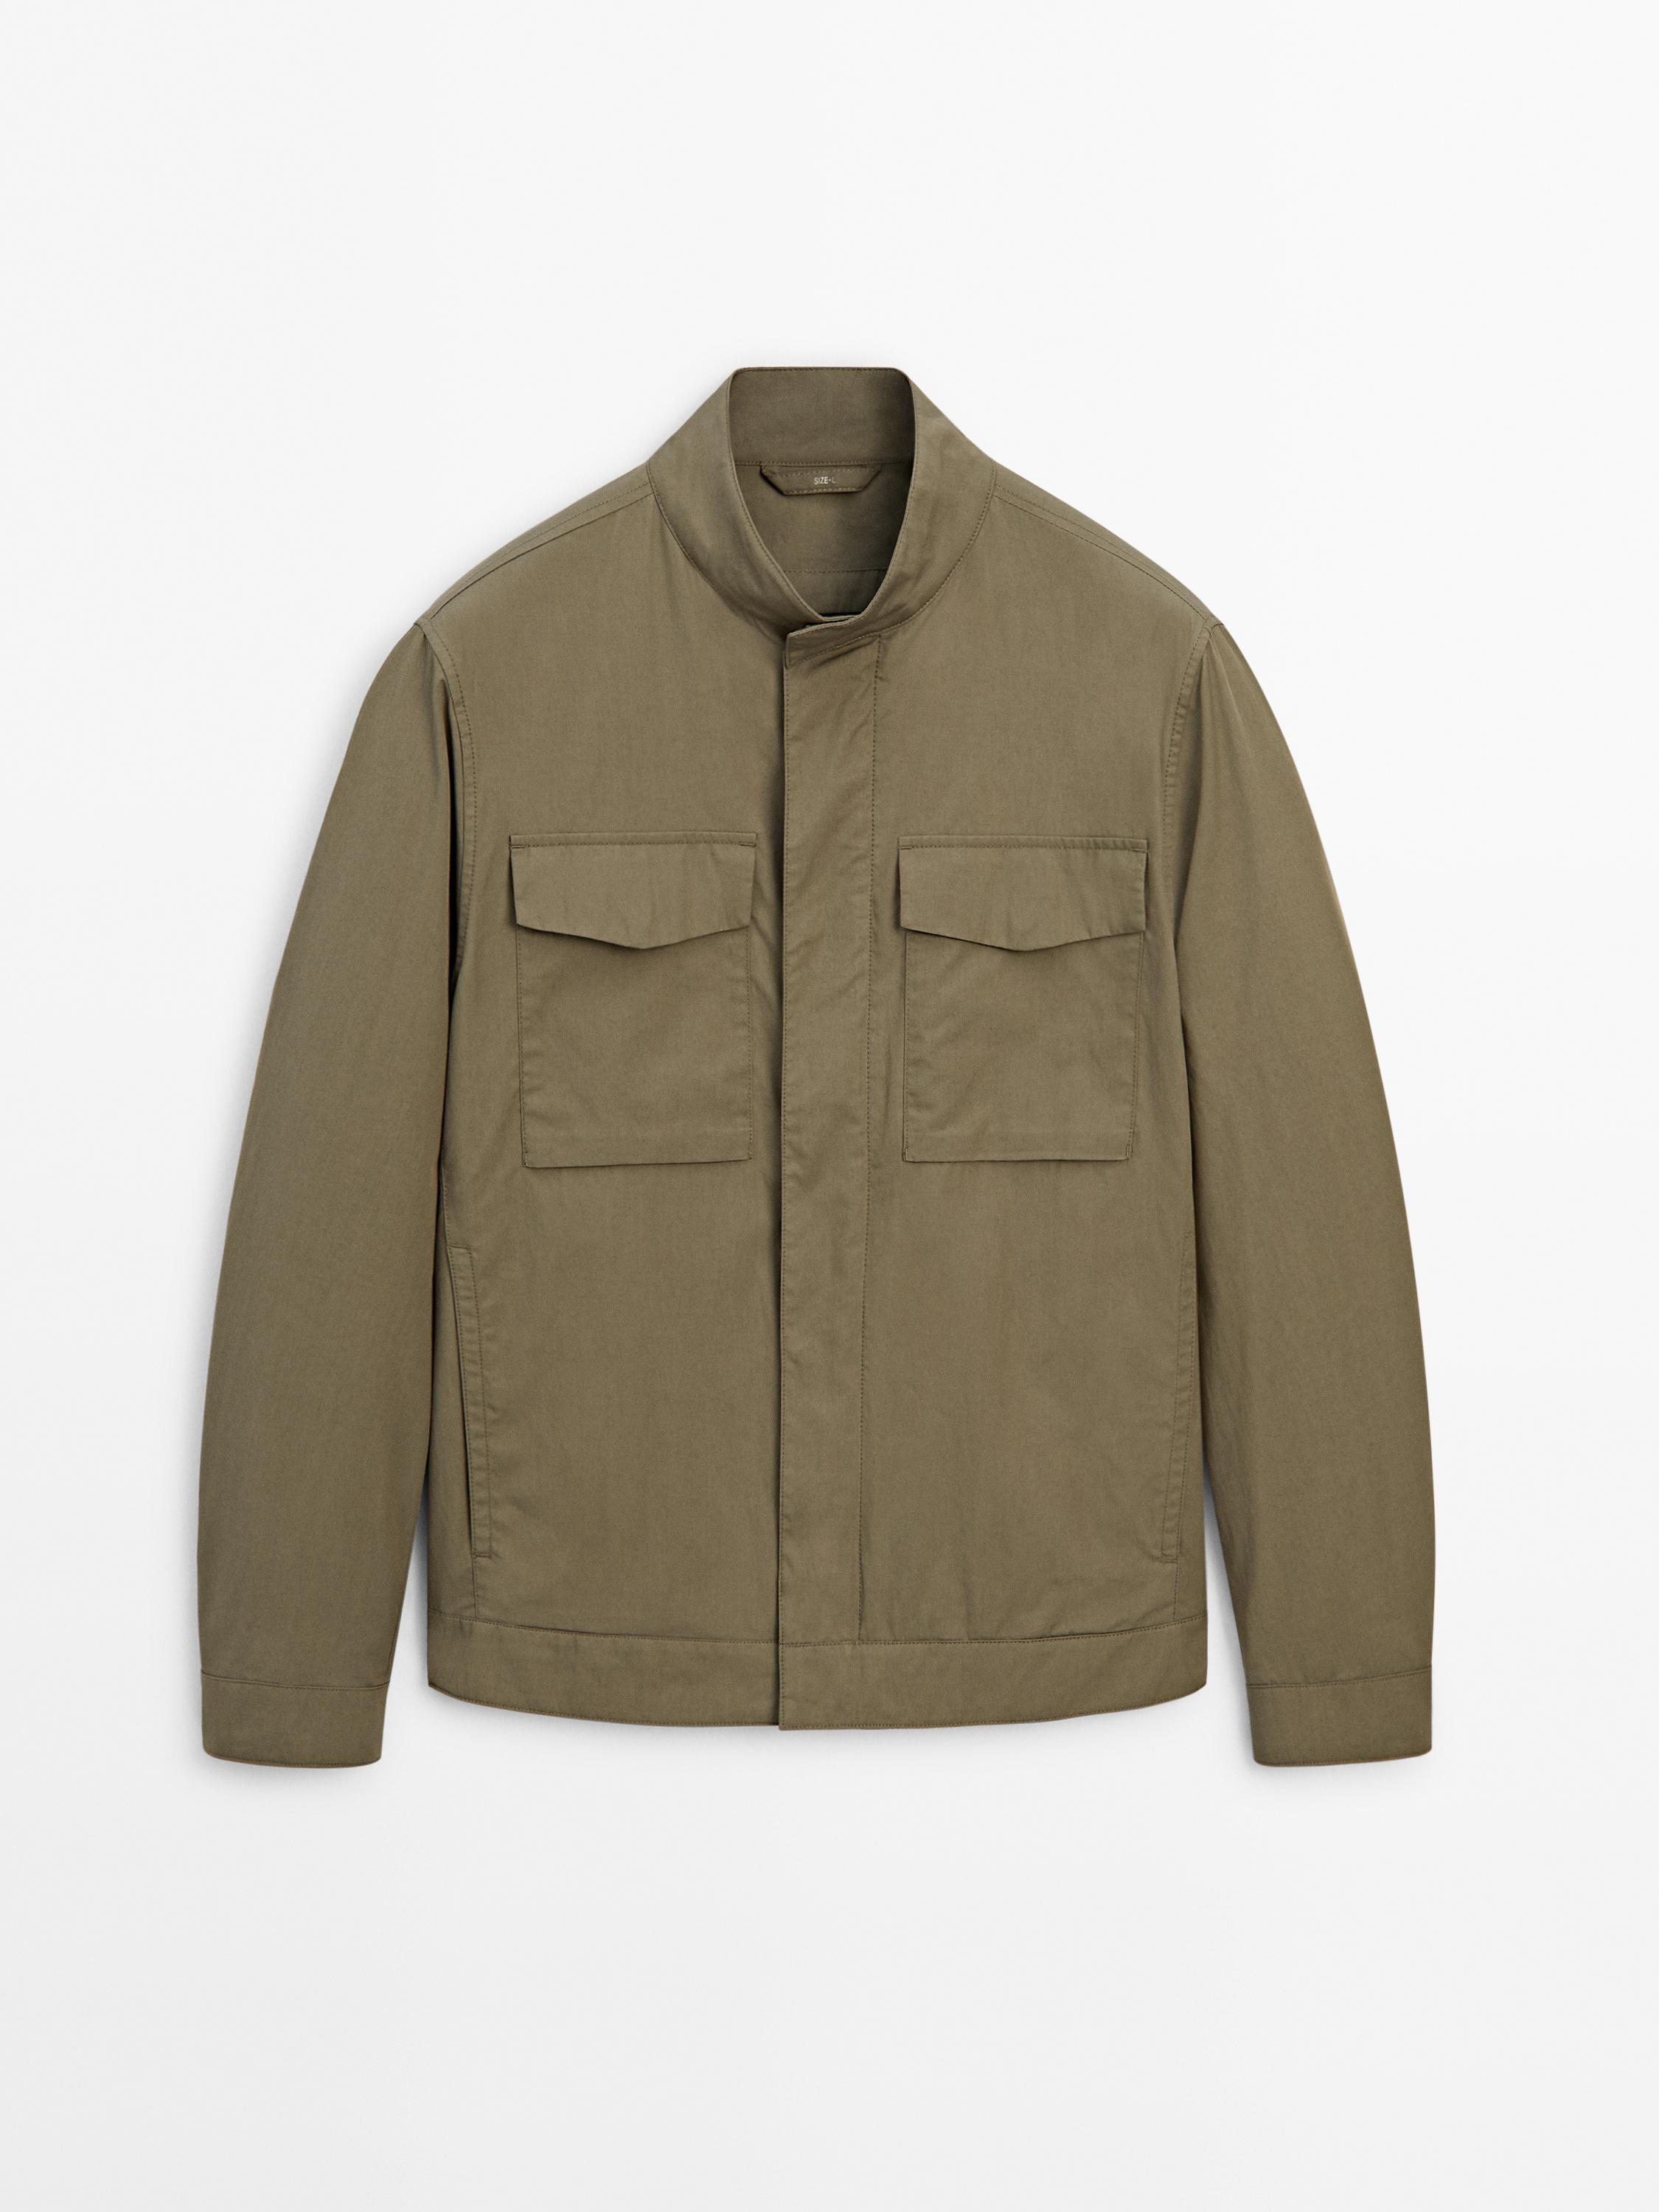 Jacket with chest pockets - Light khaki | ZARA United States